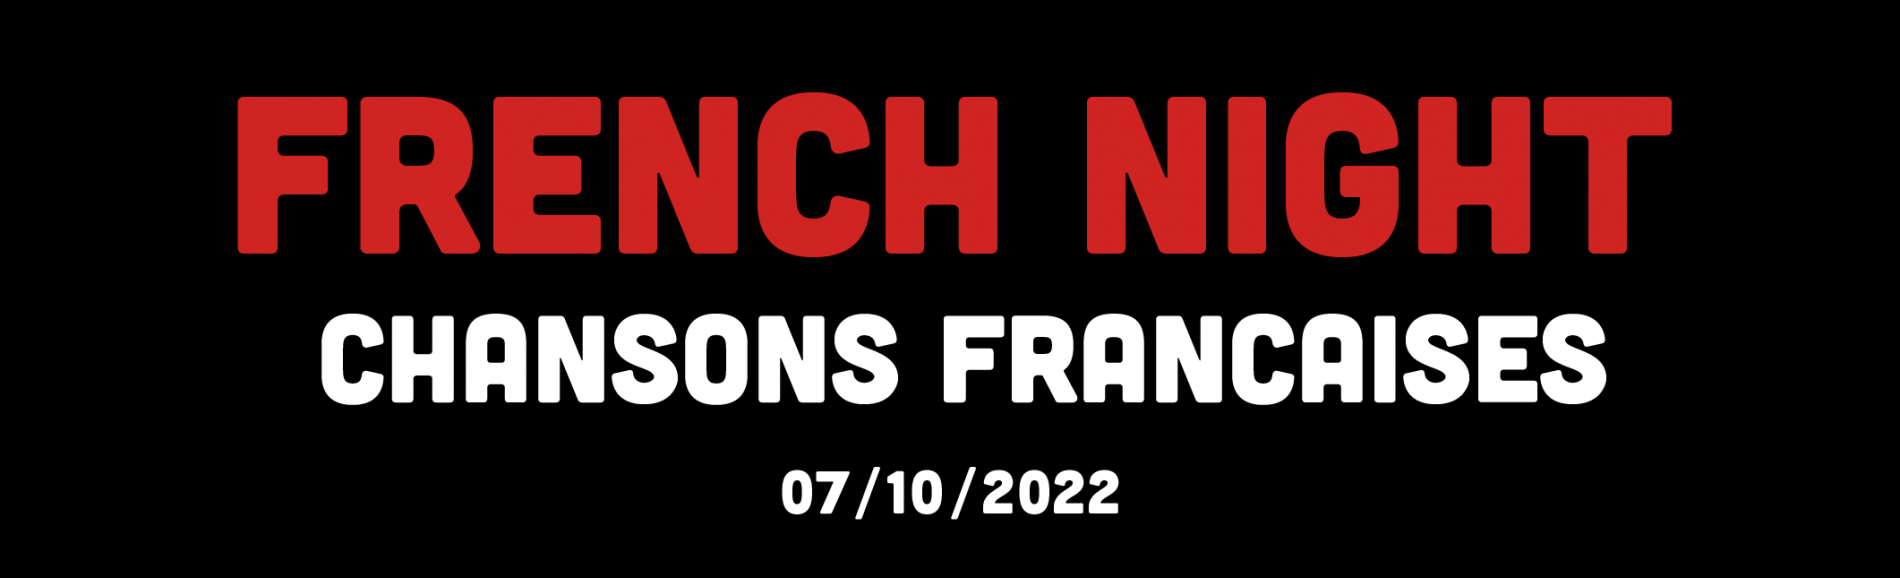 FRENCH NIGHT - 17/11/2022